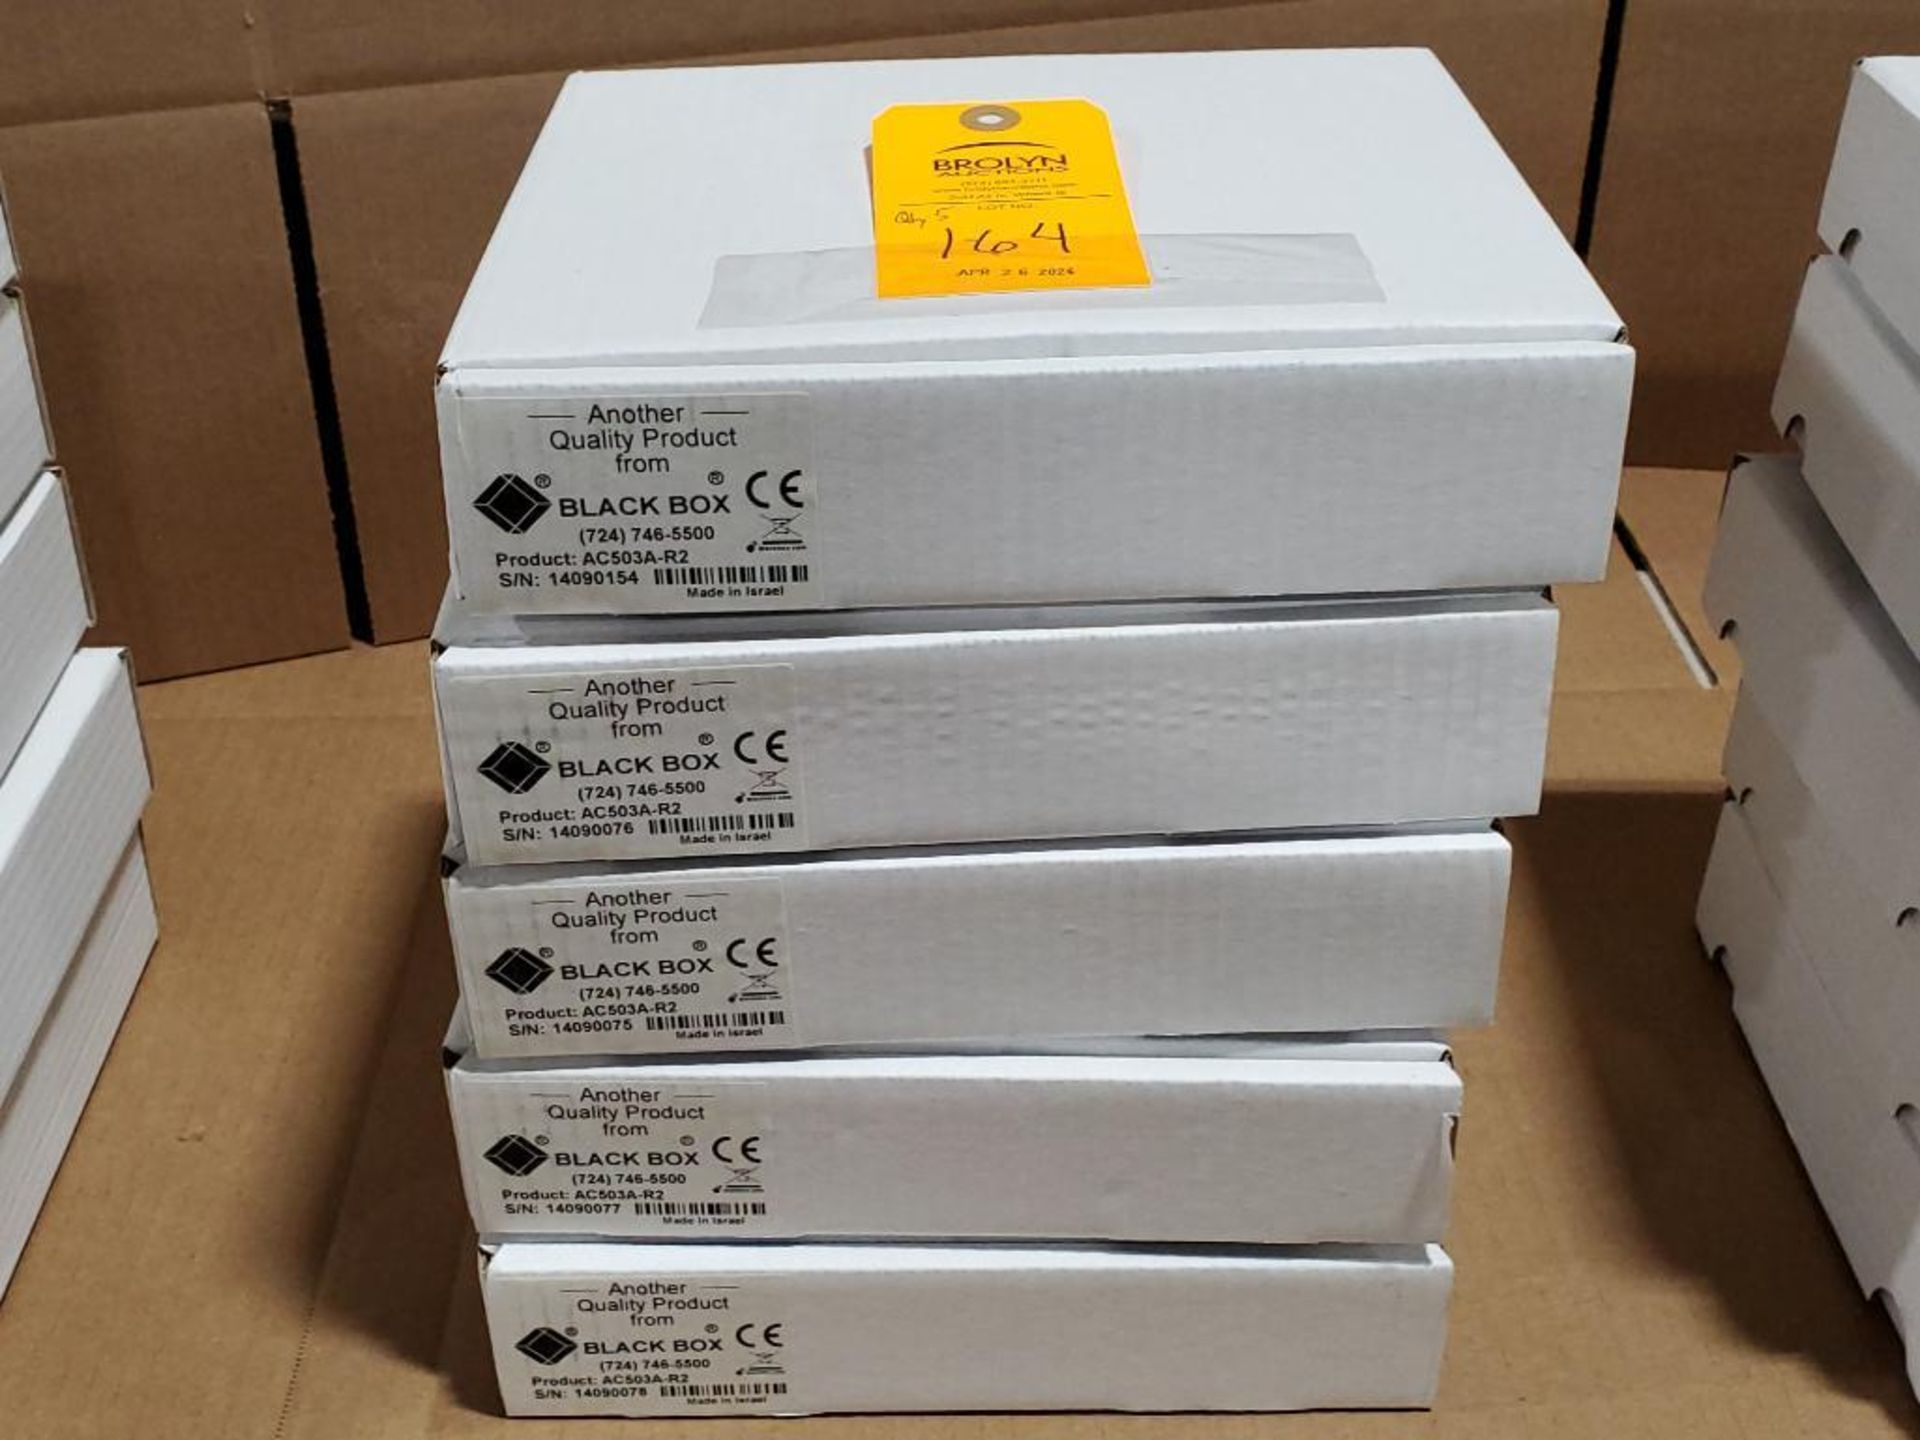 Qty 5 - Black Box video splitter. Part number AC503A-R2.